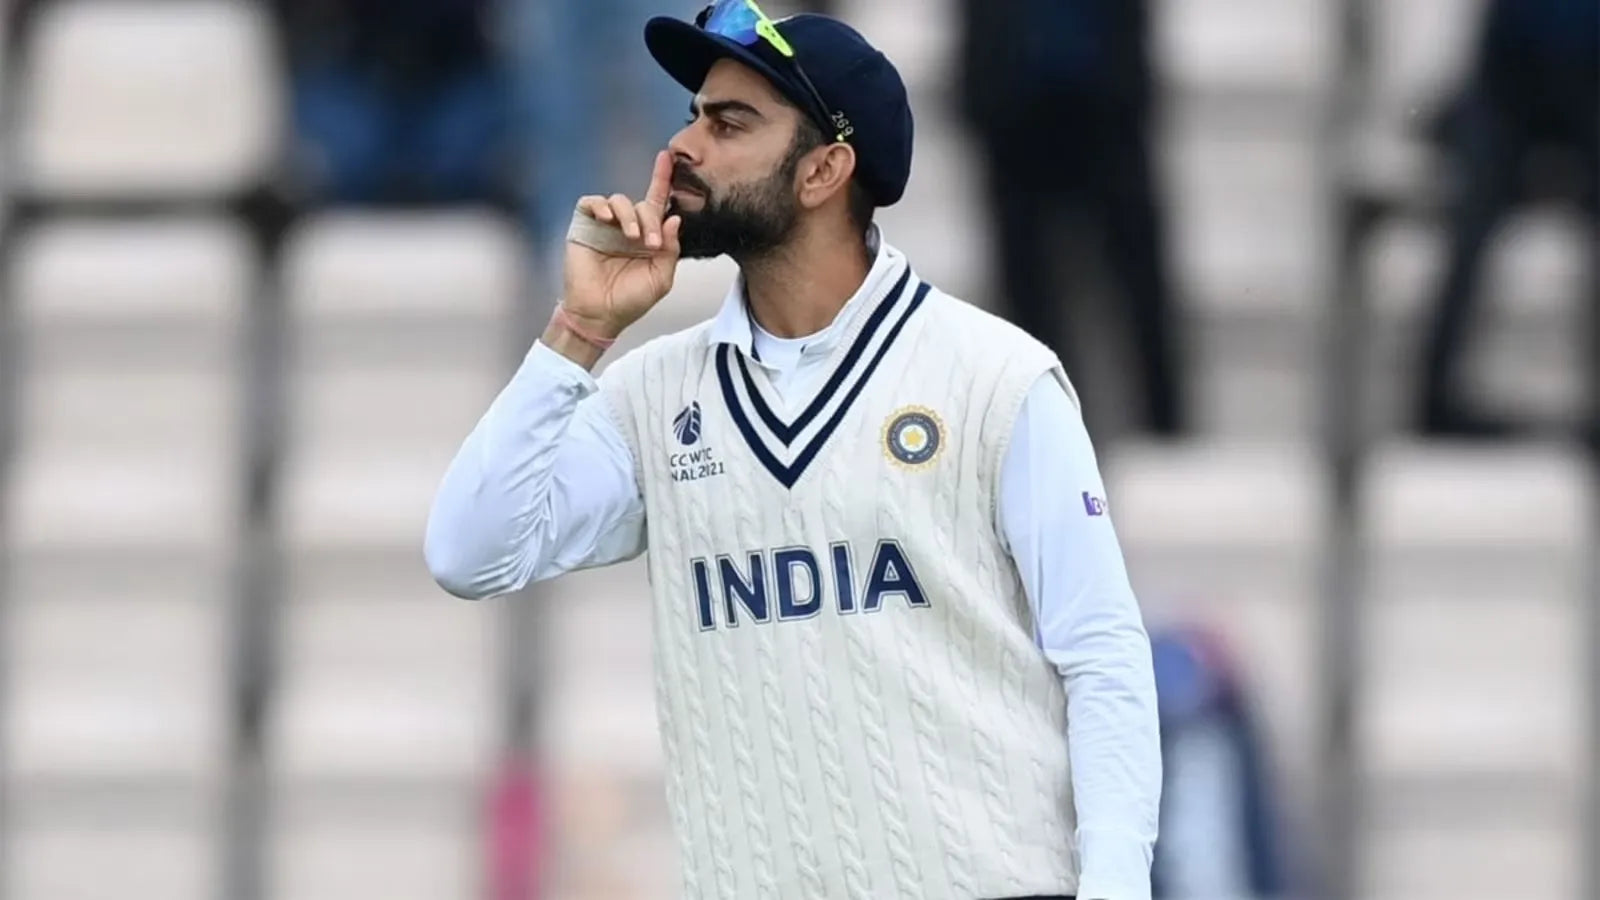 Virat Kohli sushing an opponent in a test match as India's Captain